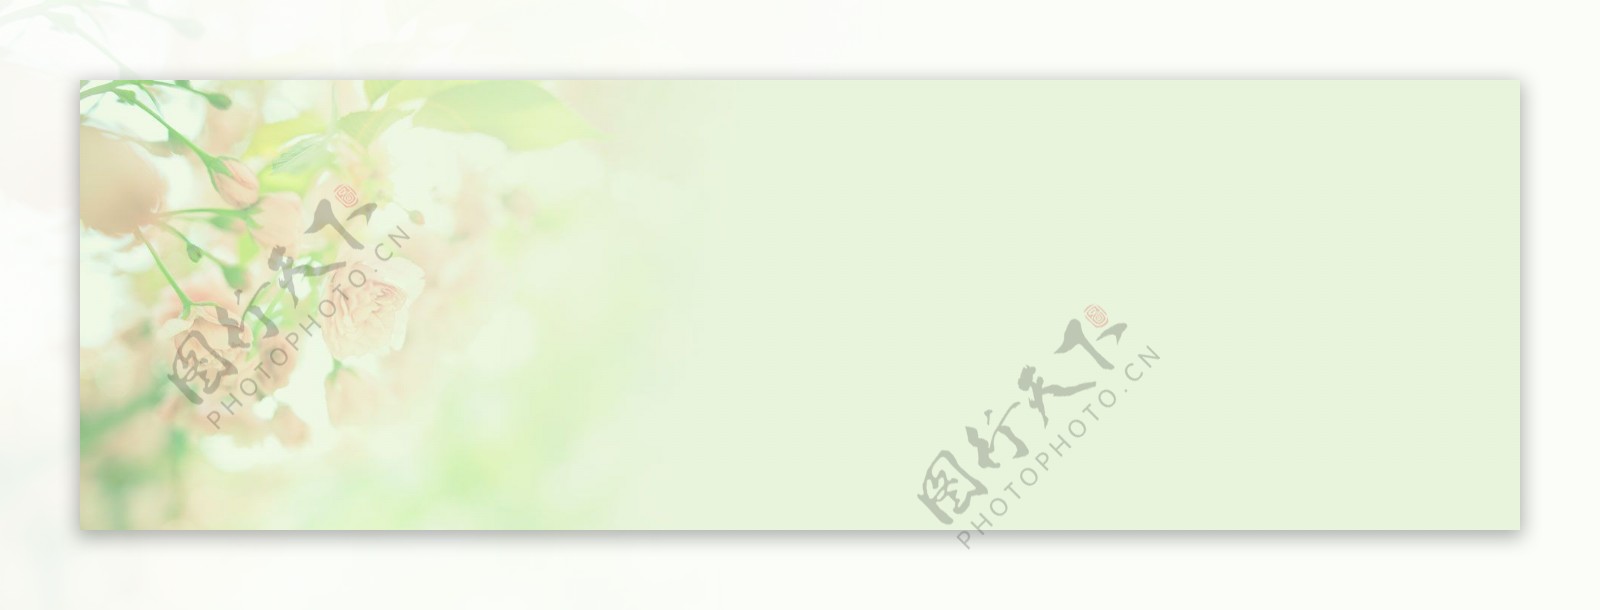 绿色花朵清纯背景banner